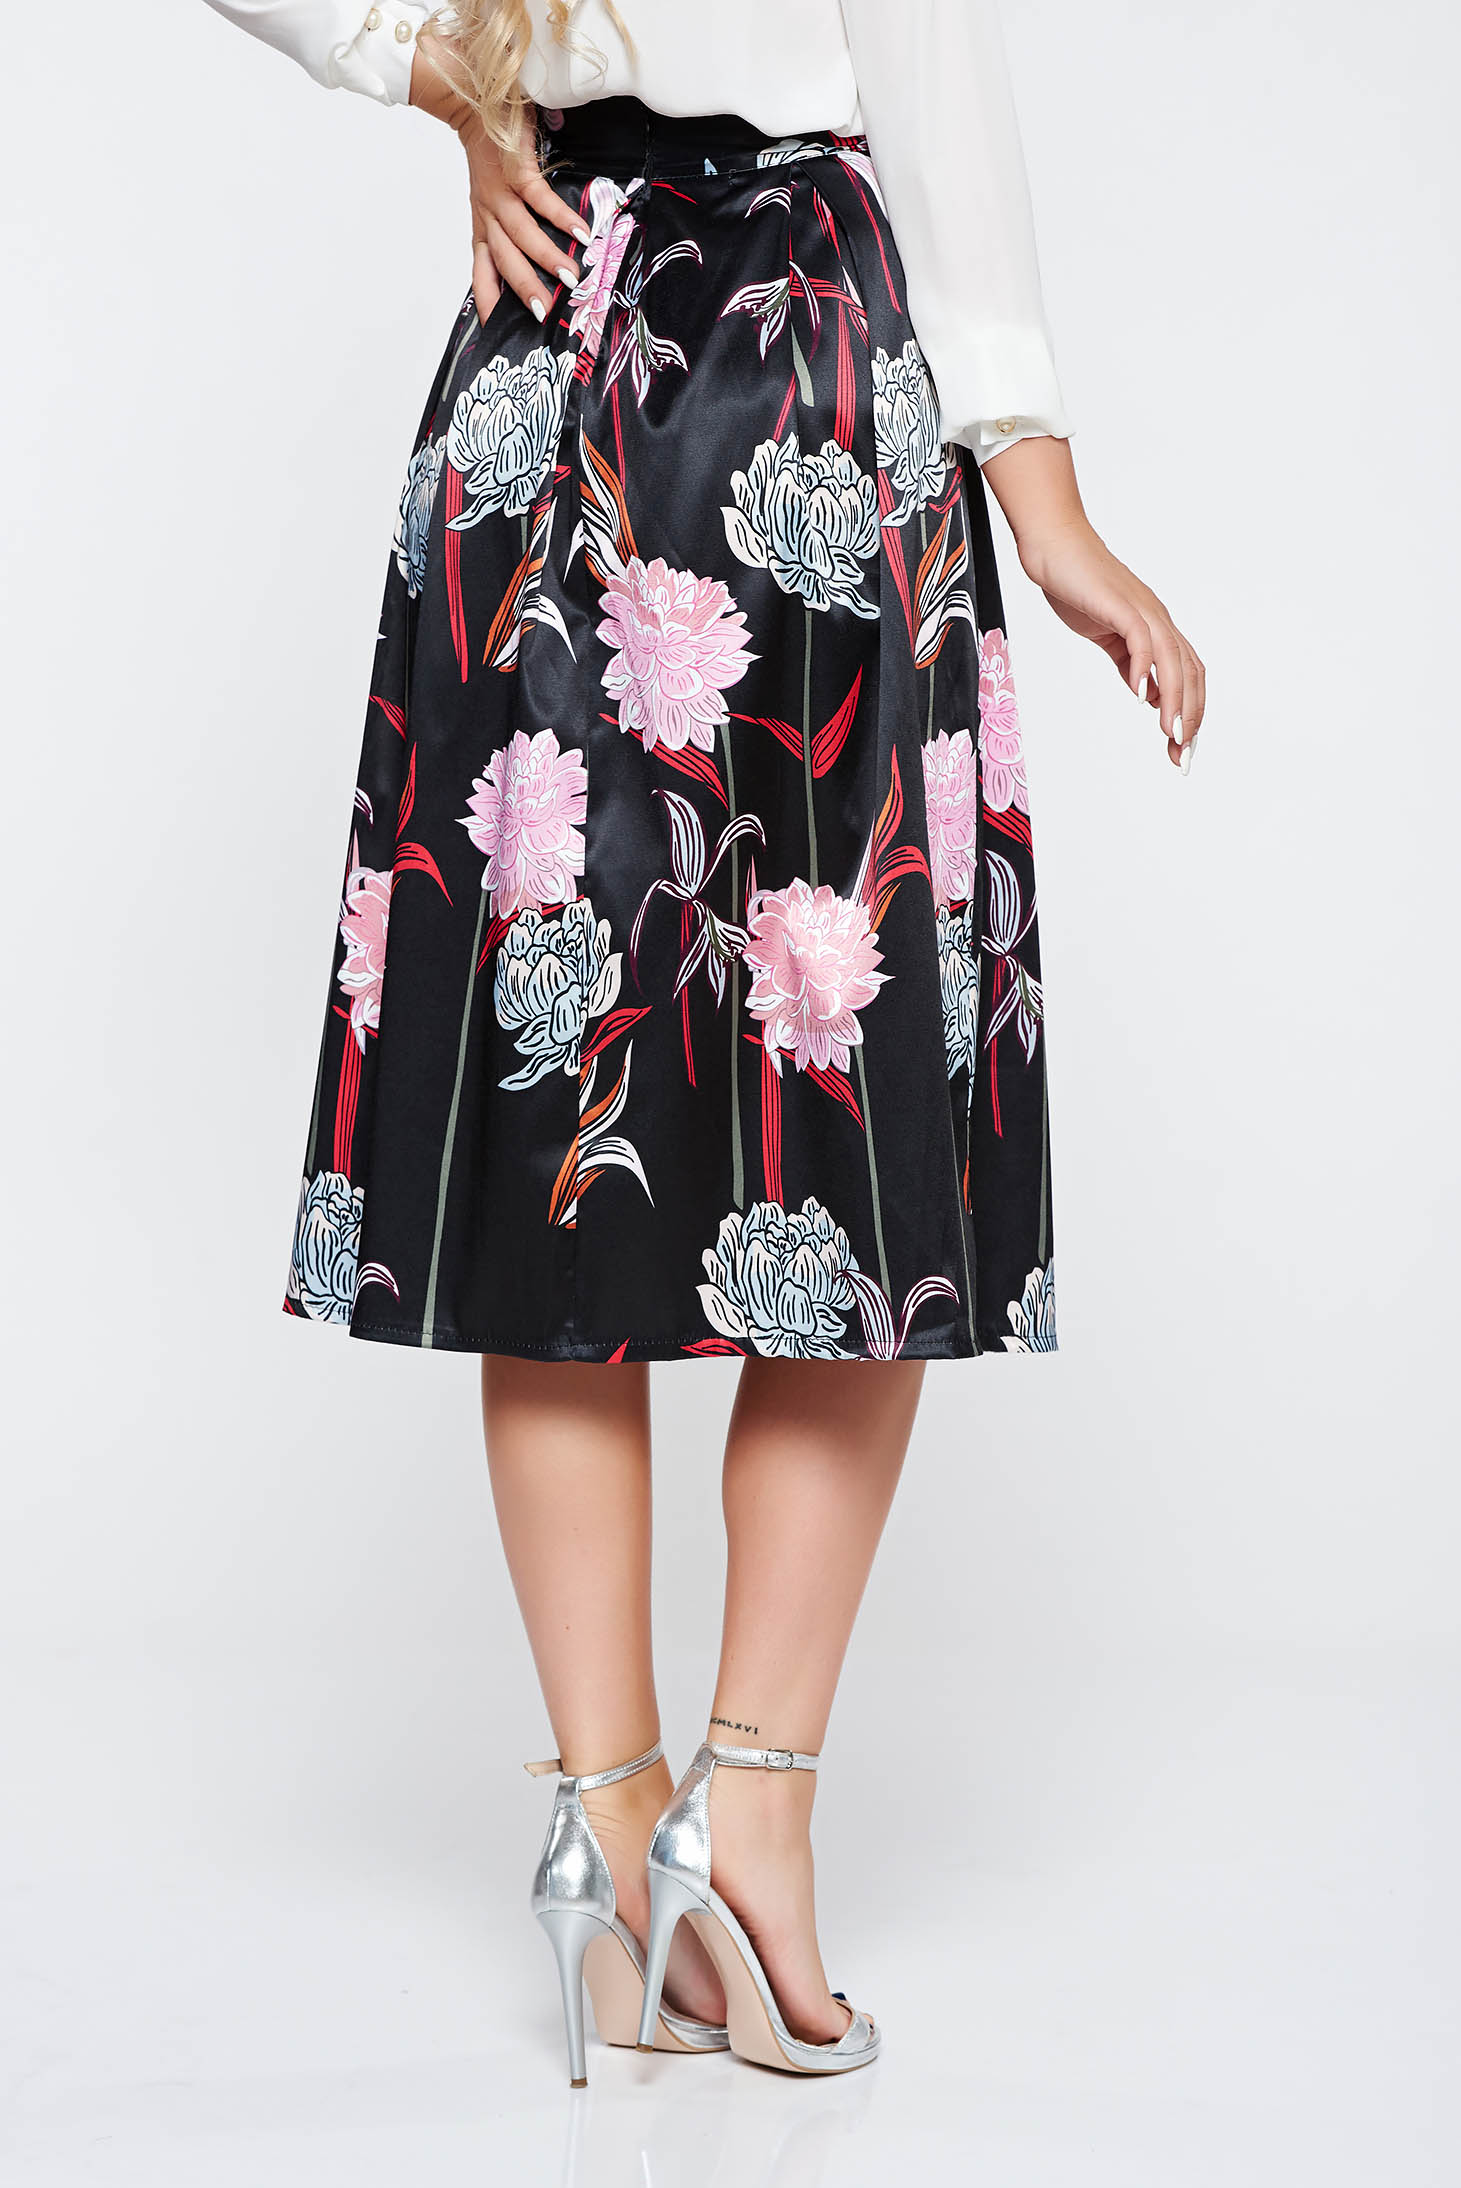 Sunshine Black Elegant Cloche Skirt High Waisted From Satin Fabric Texture 6054